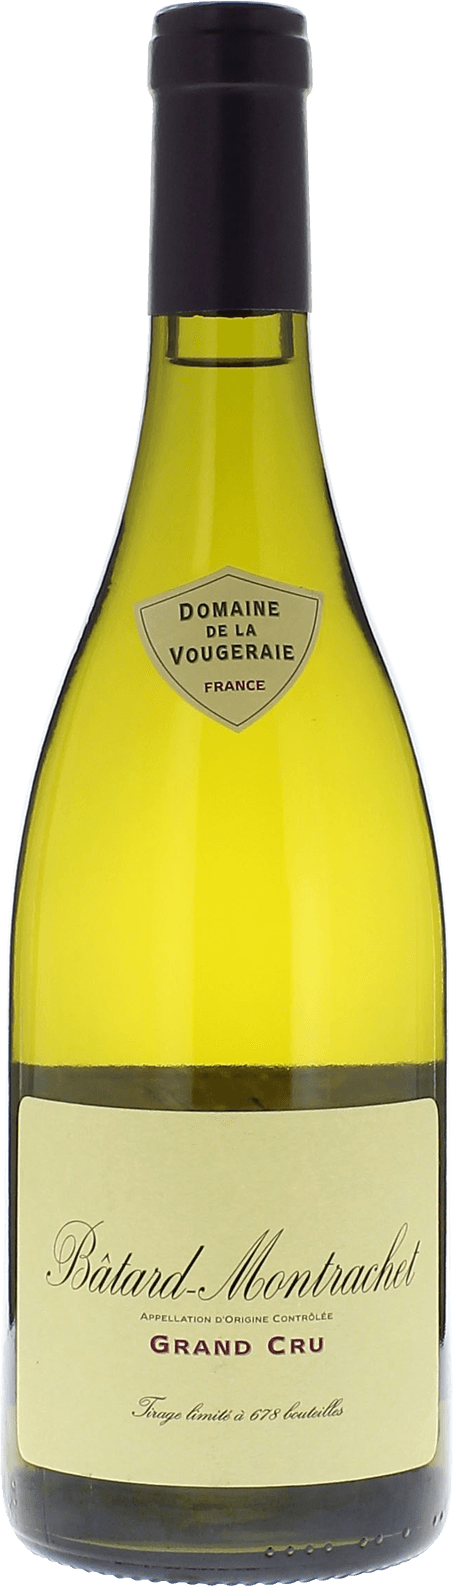 Batard montrachet grand cru 2017 Domaine VOUGERAIE, Bourgogne blanc